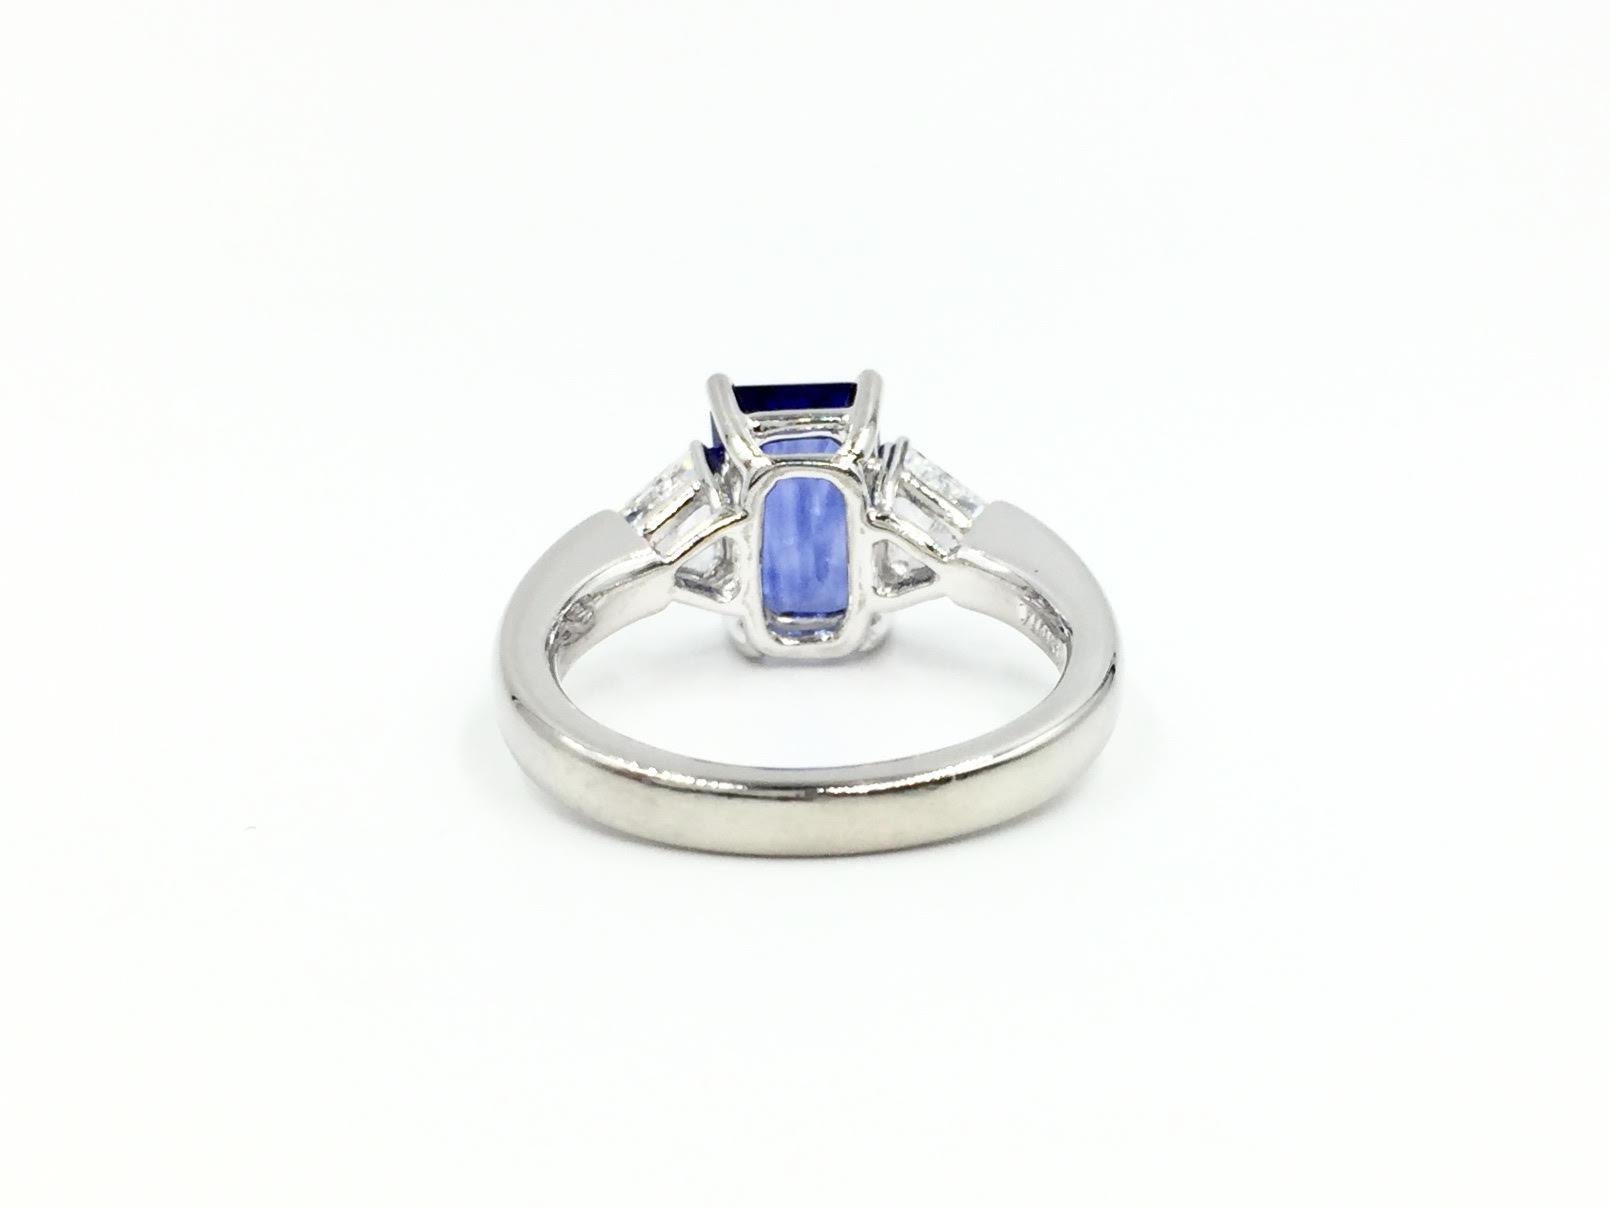 Emerald Cut 3.13 Carat Blue Sapphire Platinum Ring with Trillion Diamonds